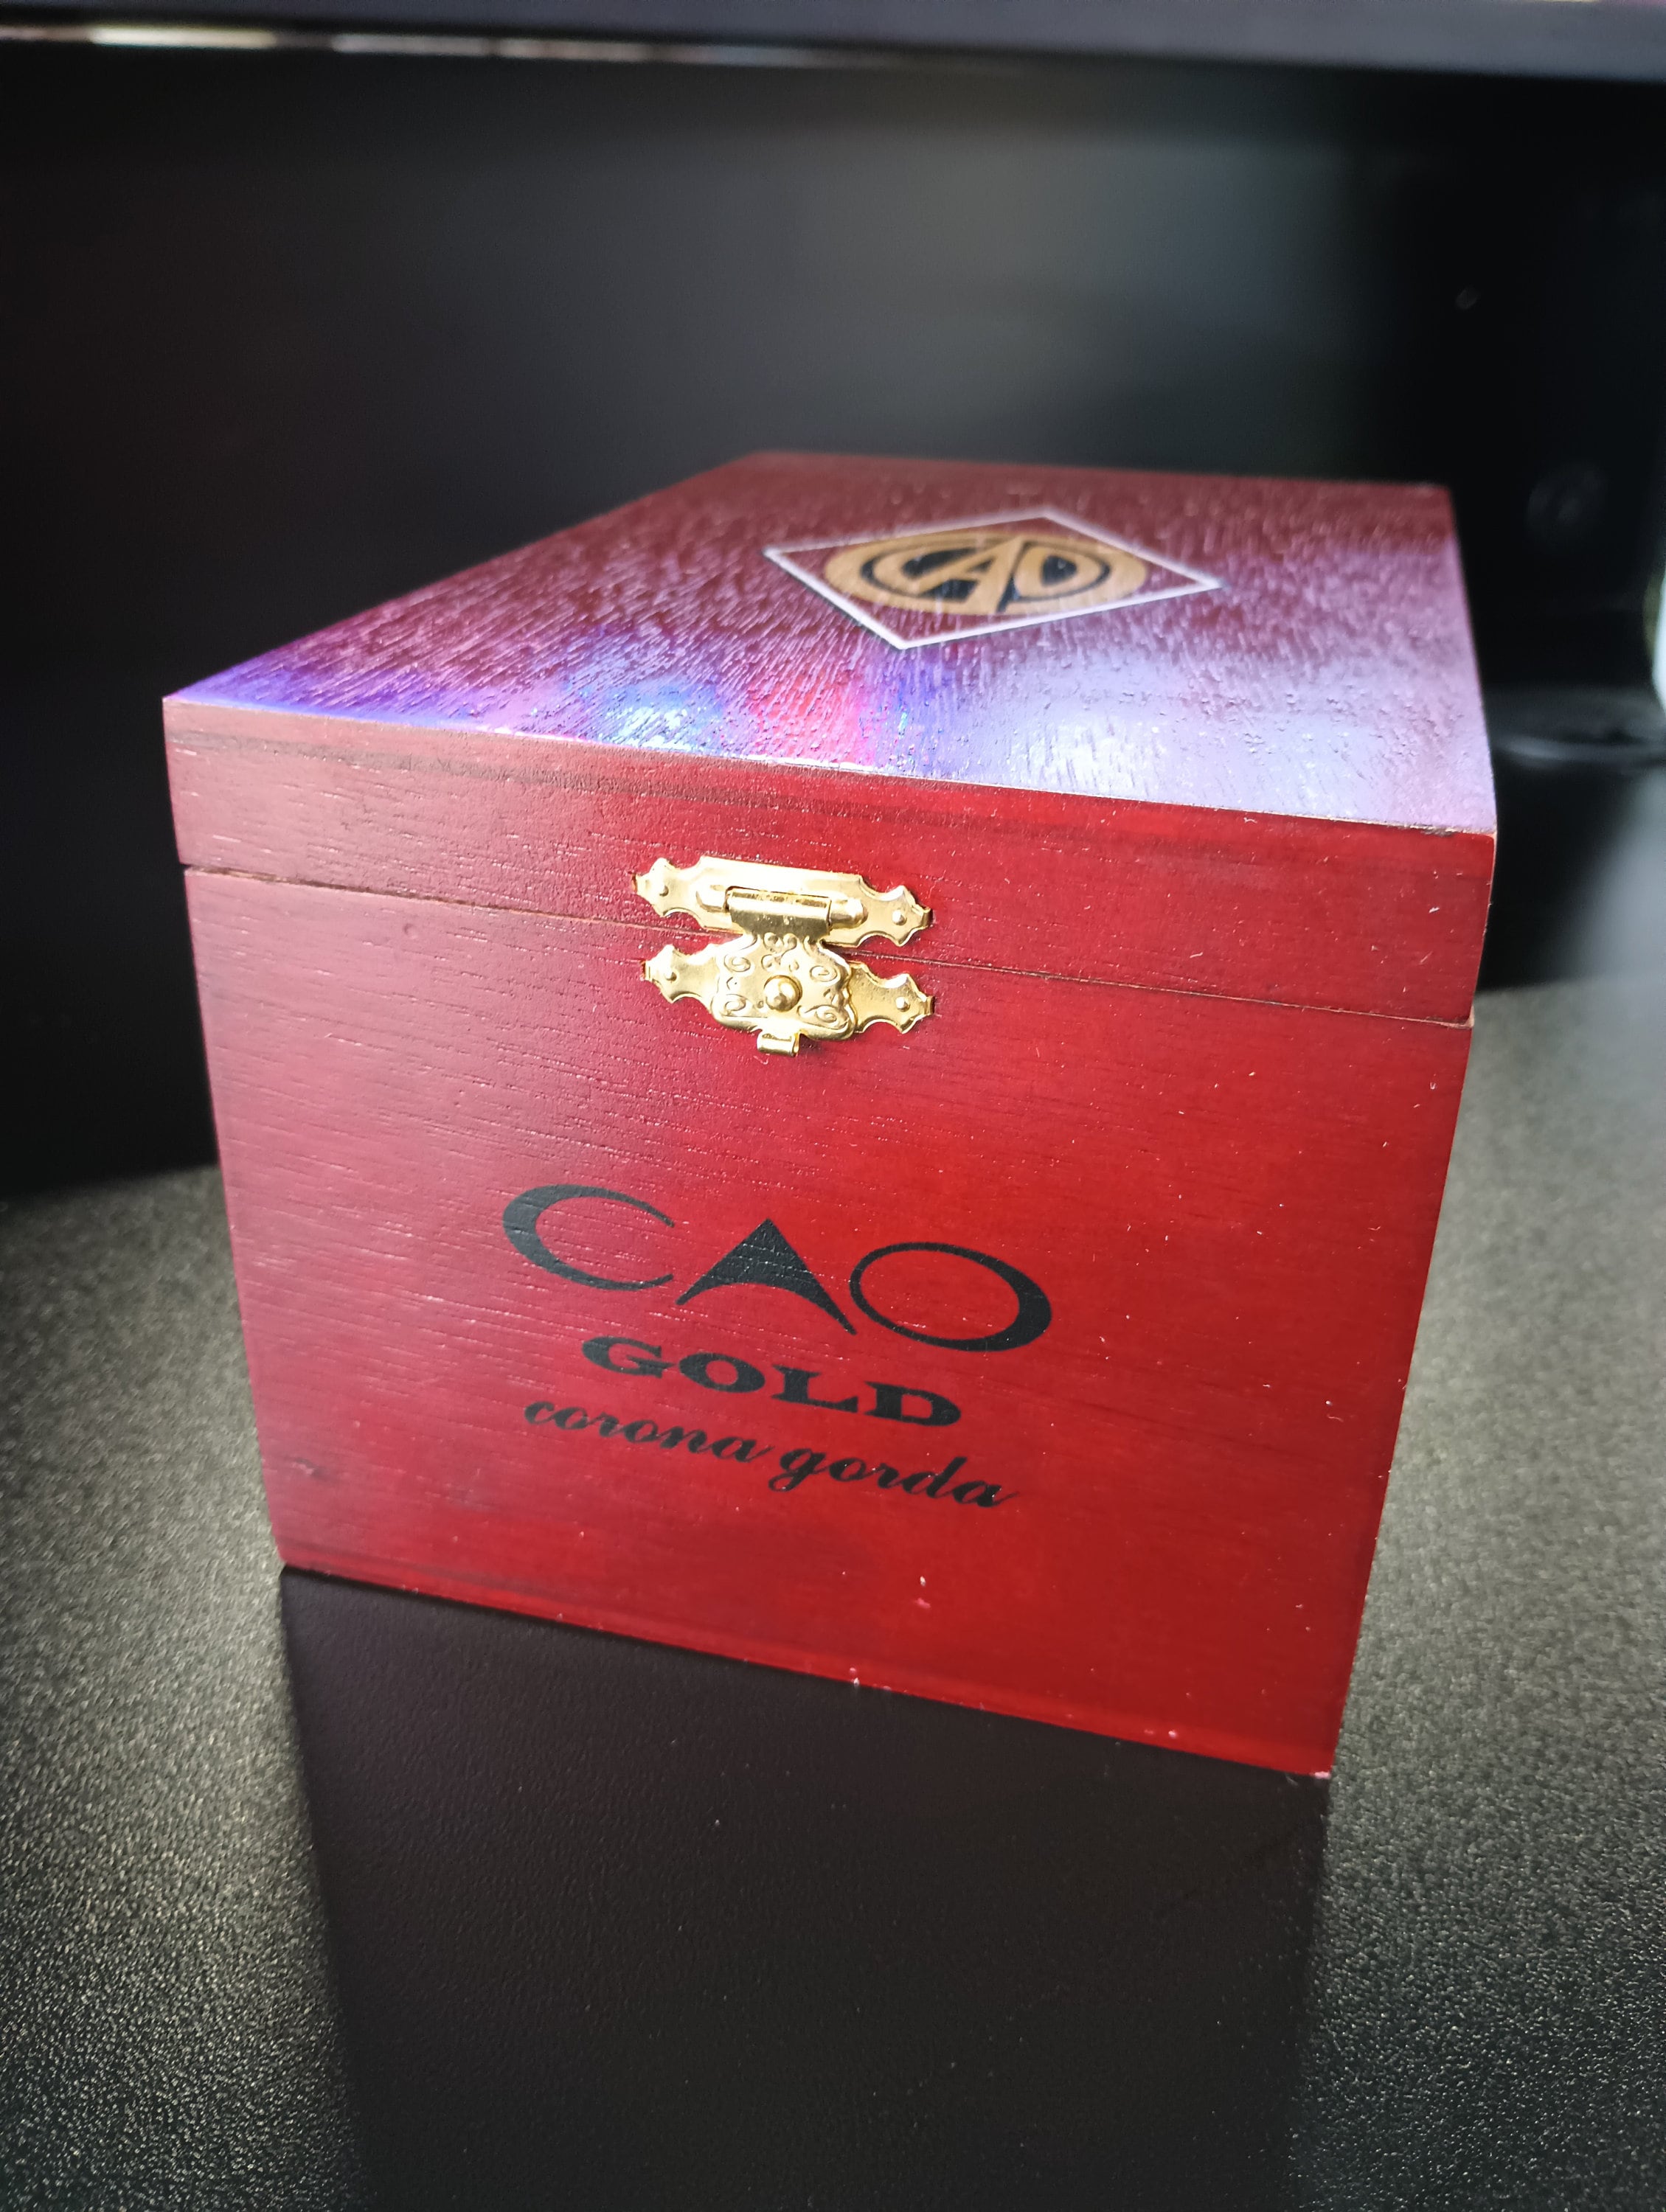 CAO Gold Robusto Empty Wooden Box